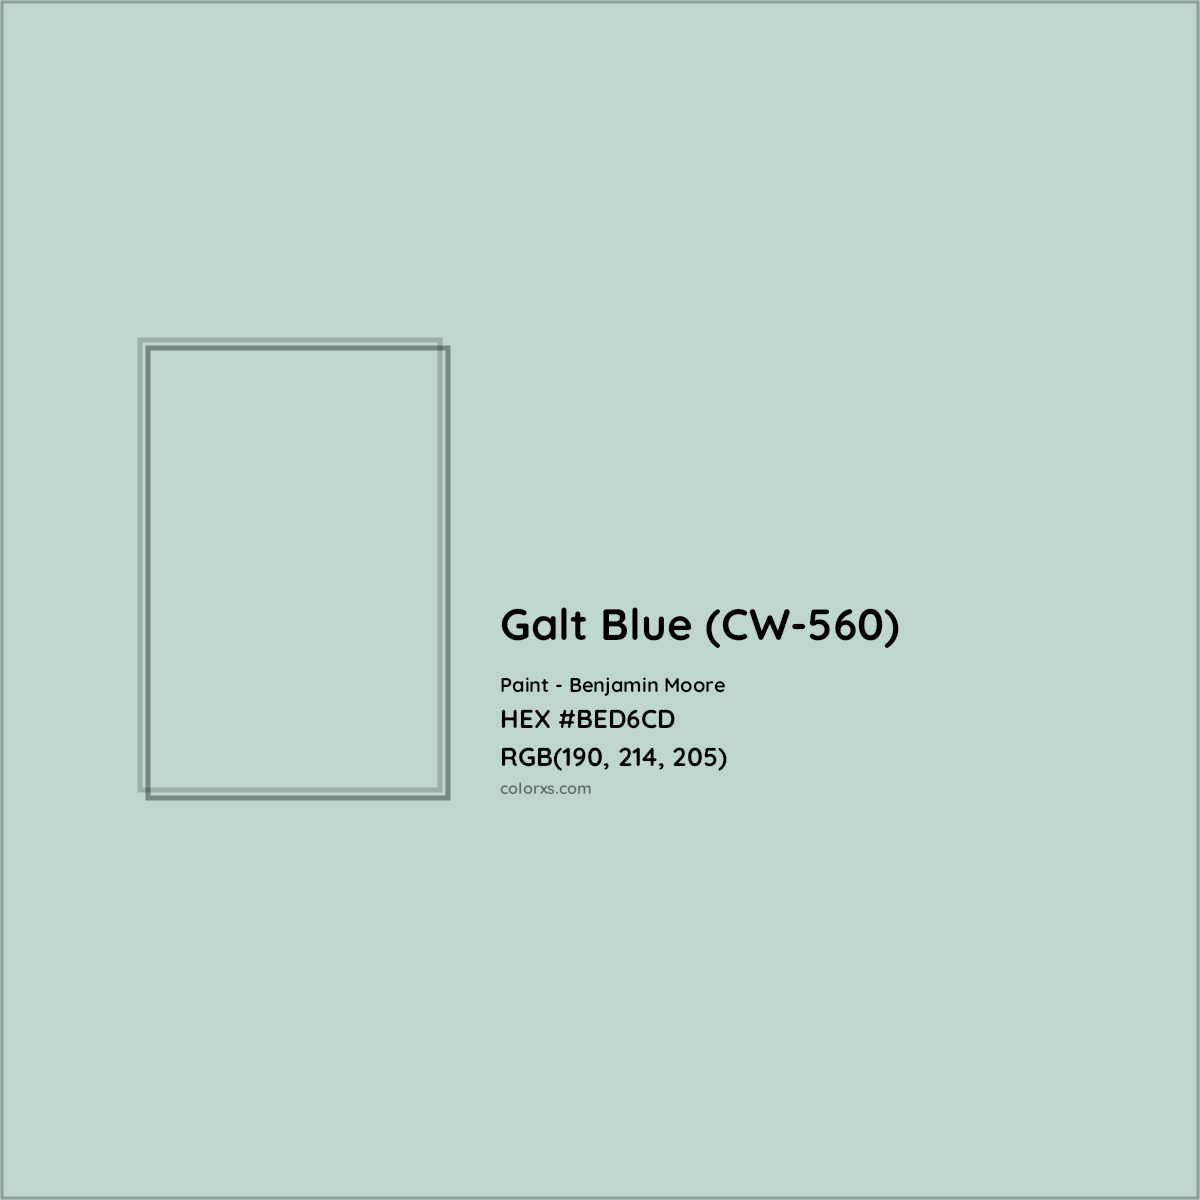 HEX #BED6CD Galt Blue (CW-560) Paint Benjamin Moore - Color Code